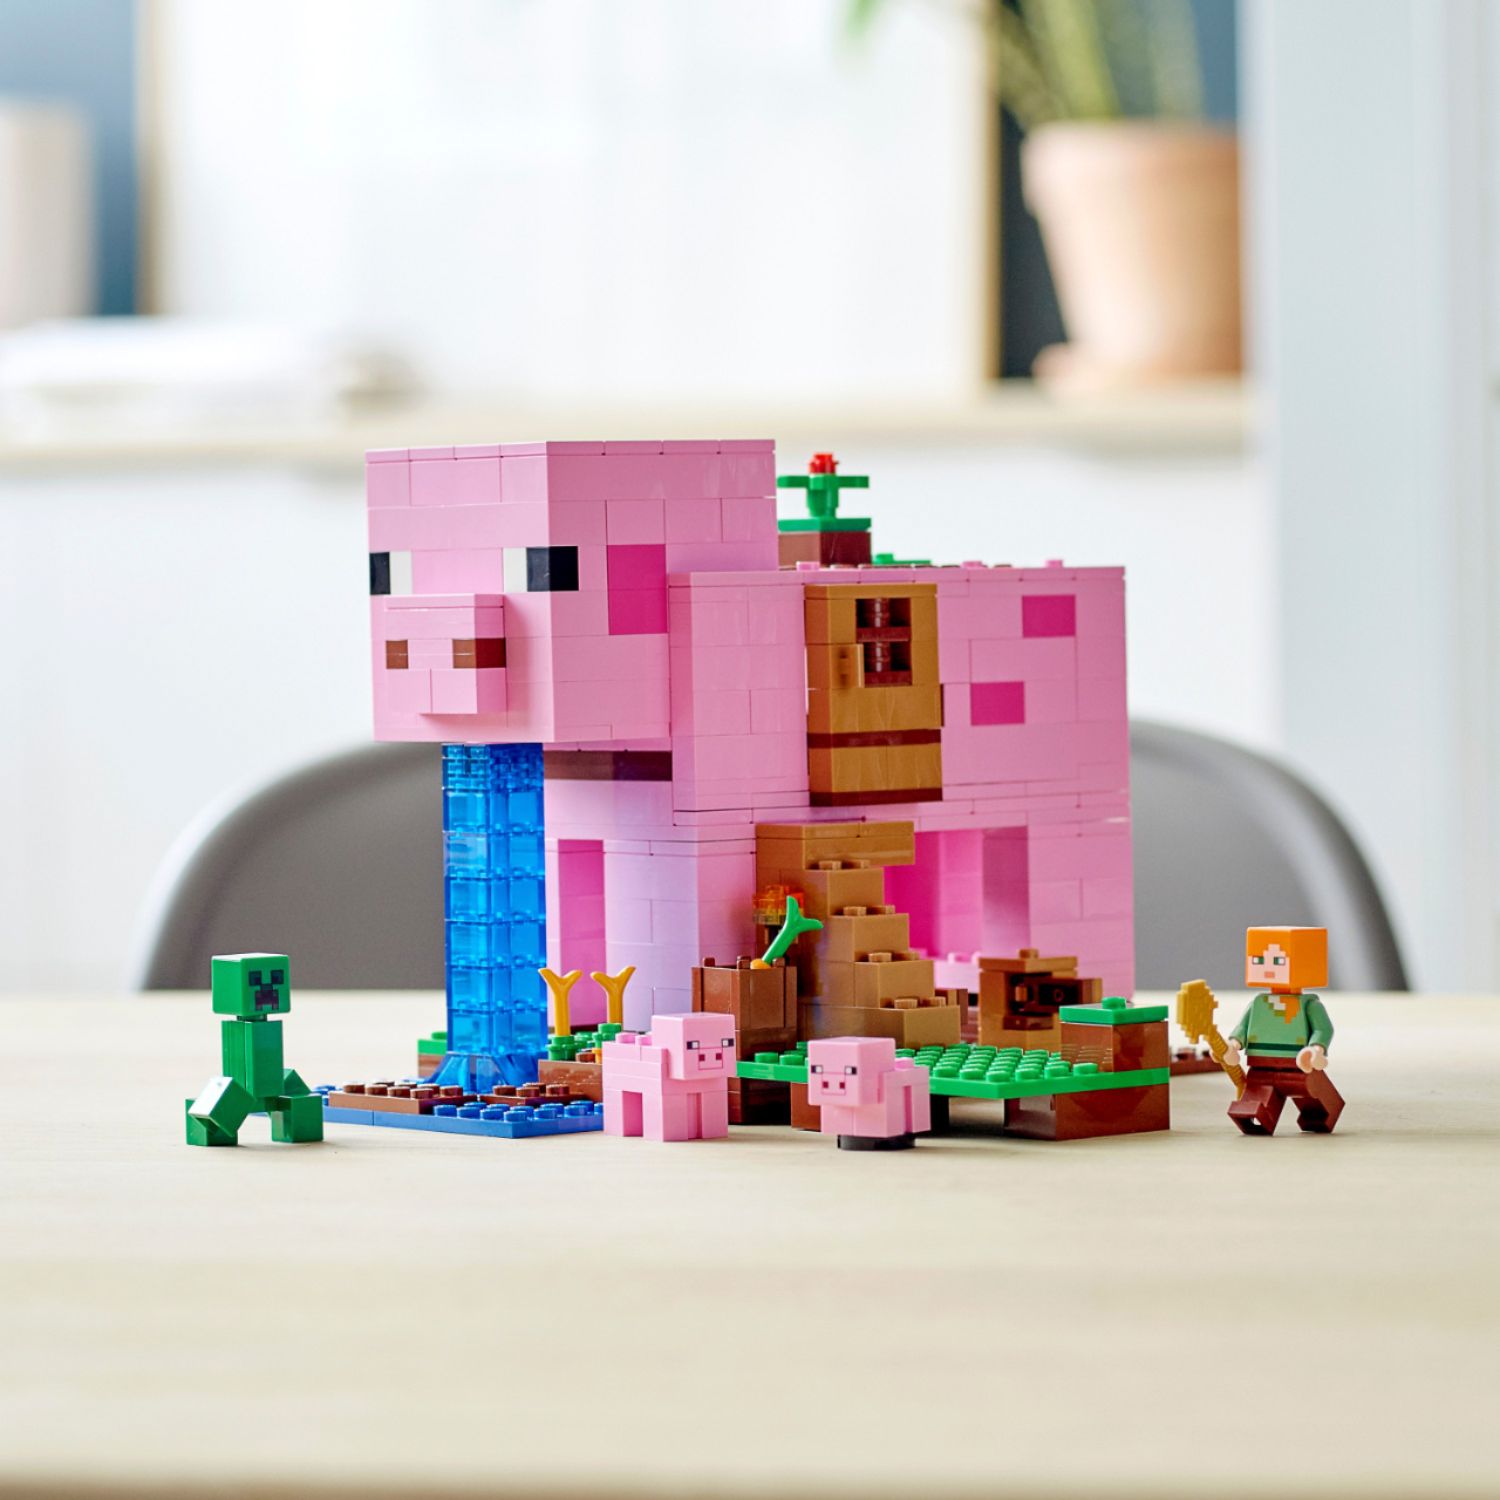 LEGO 21170 Minecraft The Pig House Building Set